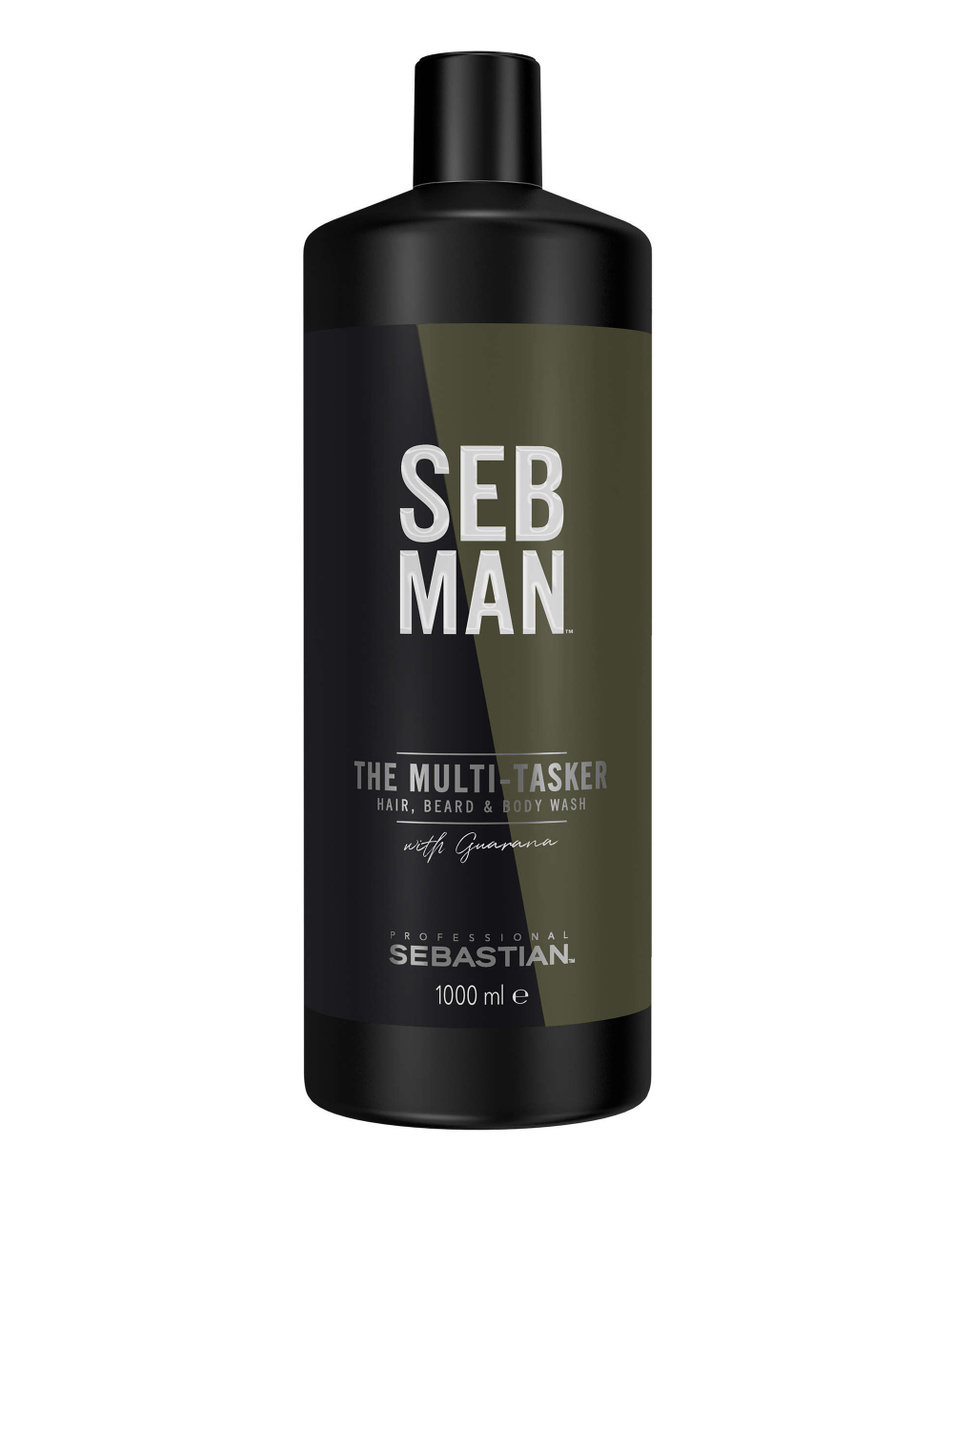 Seb Man Шампунь The MultiTasker 3 в 1 для ухода за волосами, бородой и телом, 1000 мл (цвет ), артикул 8202 | Фото 1